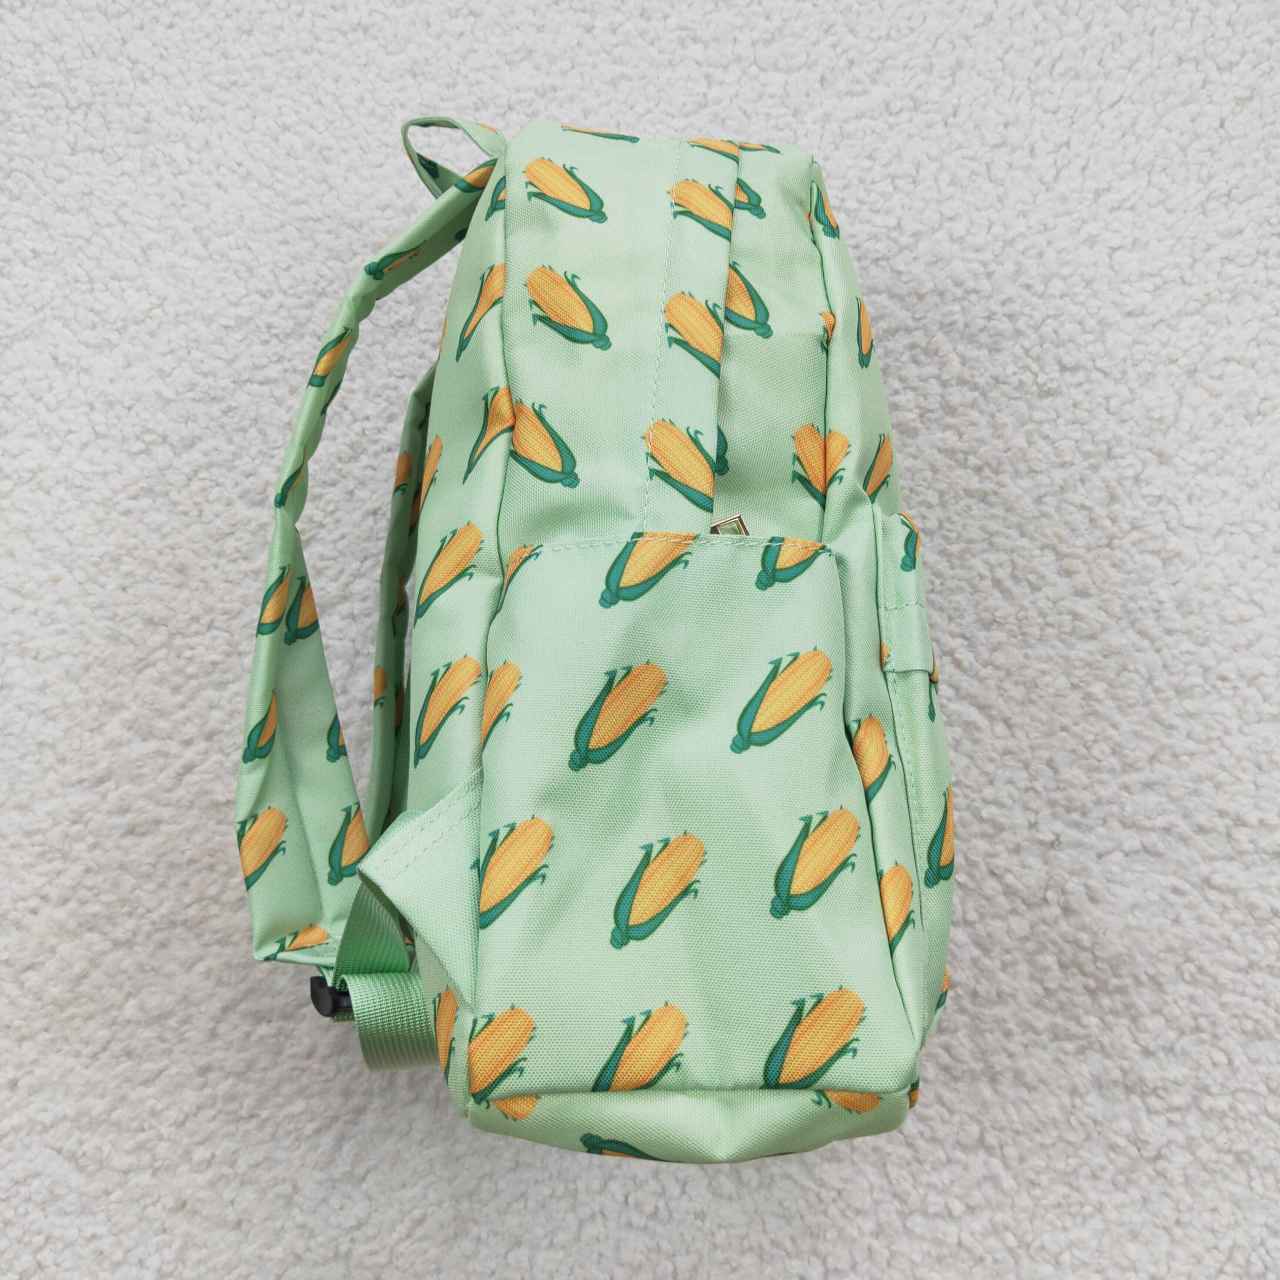 Corn print kids backpack school bag